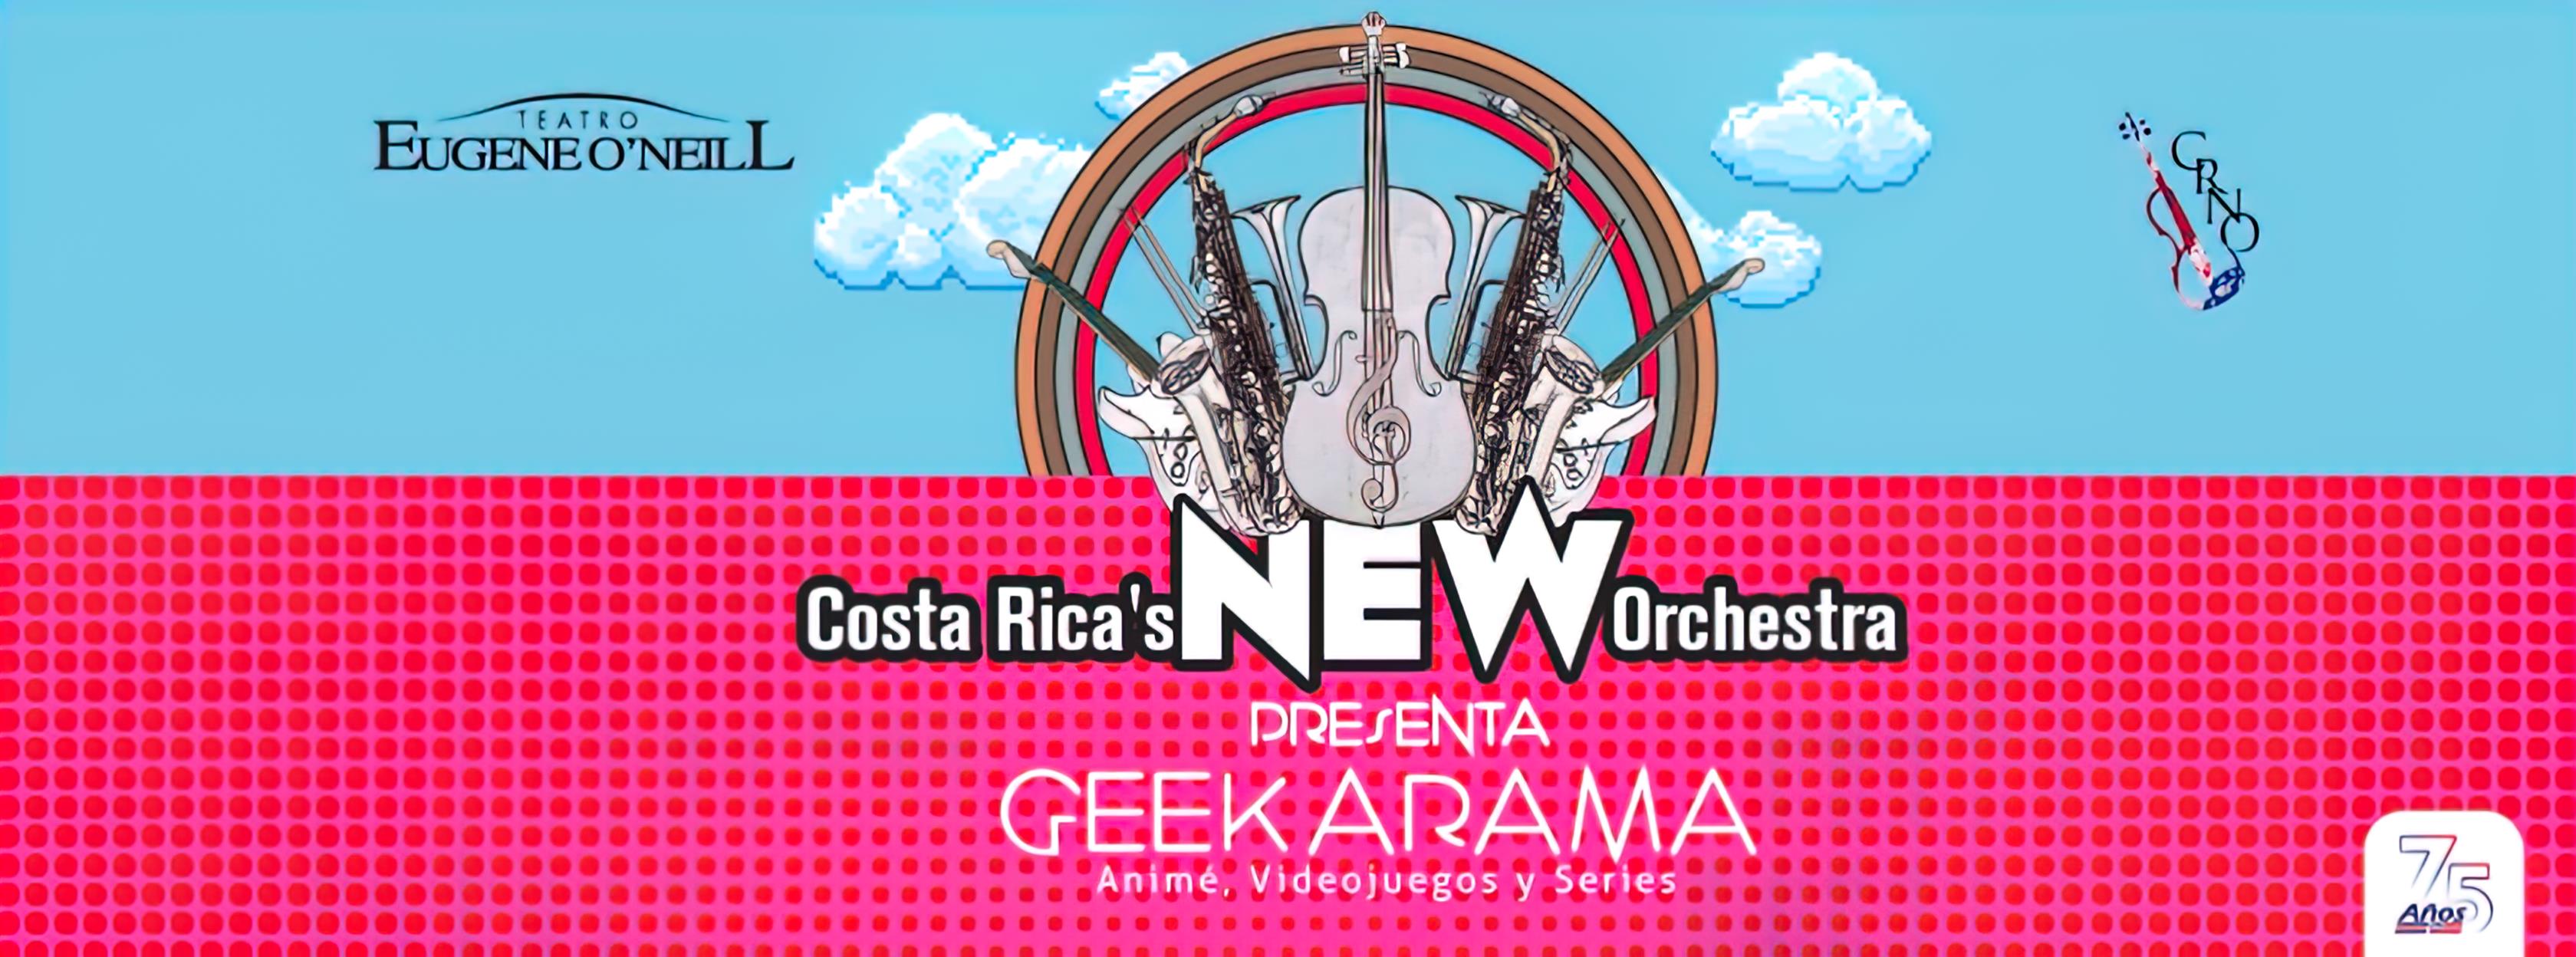 Geekarama Reprise por Costa Rica's New Orchestra